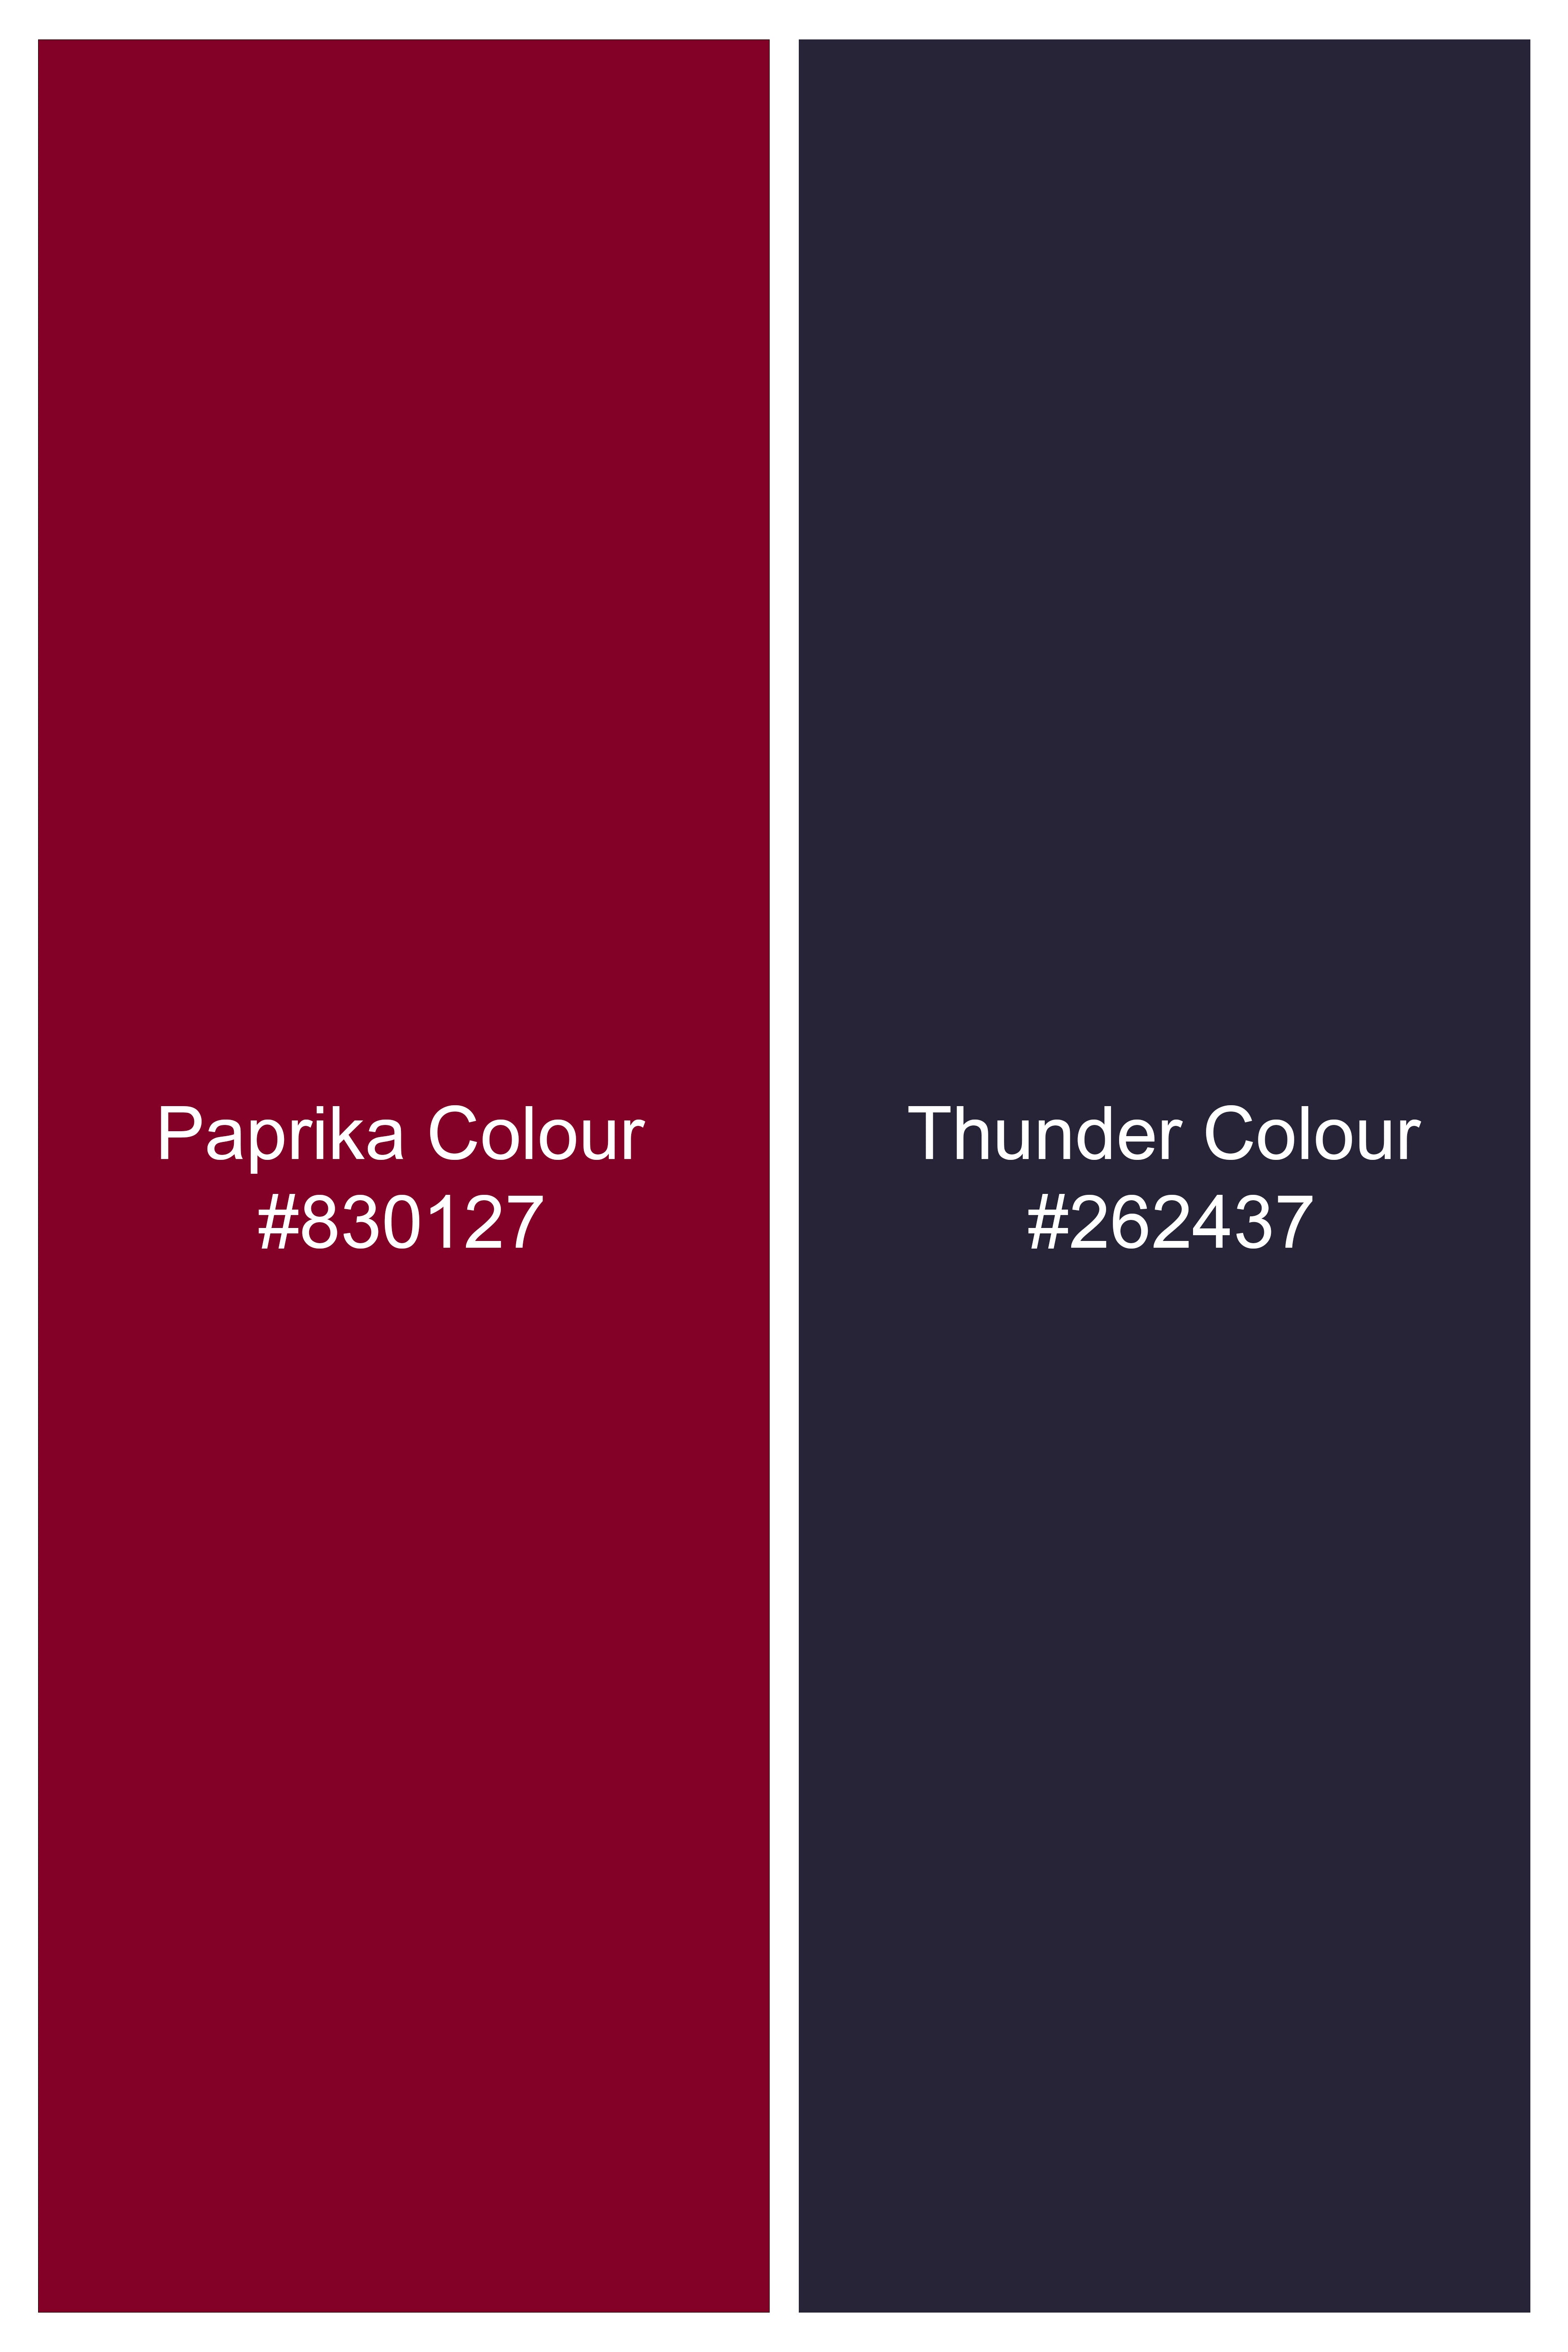 Paprika Red and Thunder Gray Premium Cotton Flat Knit Polo TS929-S, TS929-M, TS929-L, TS929-XL, TS929-XXL